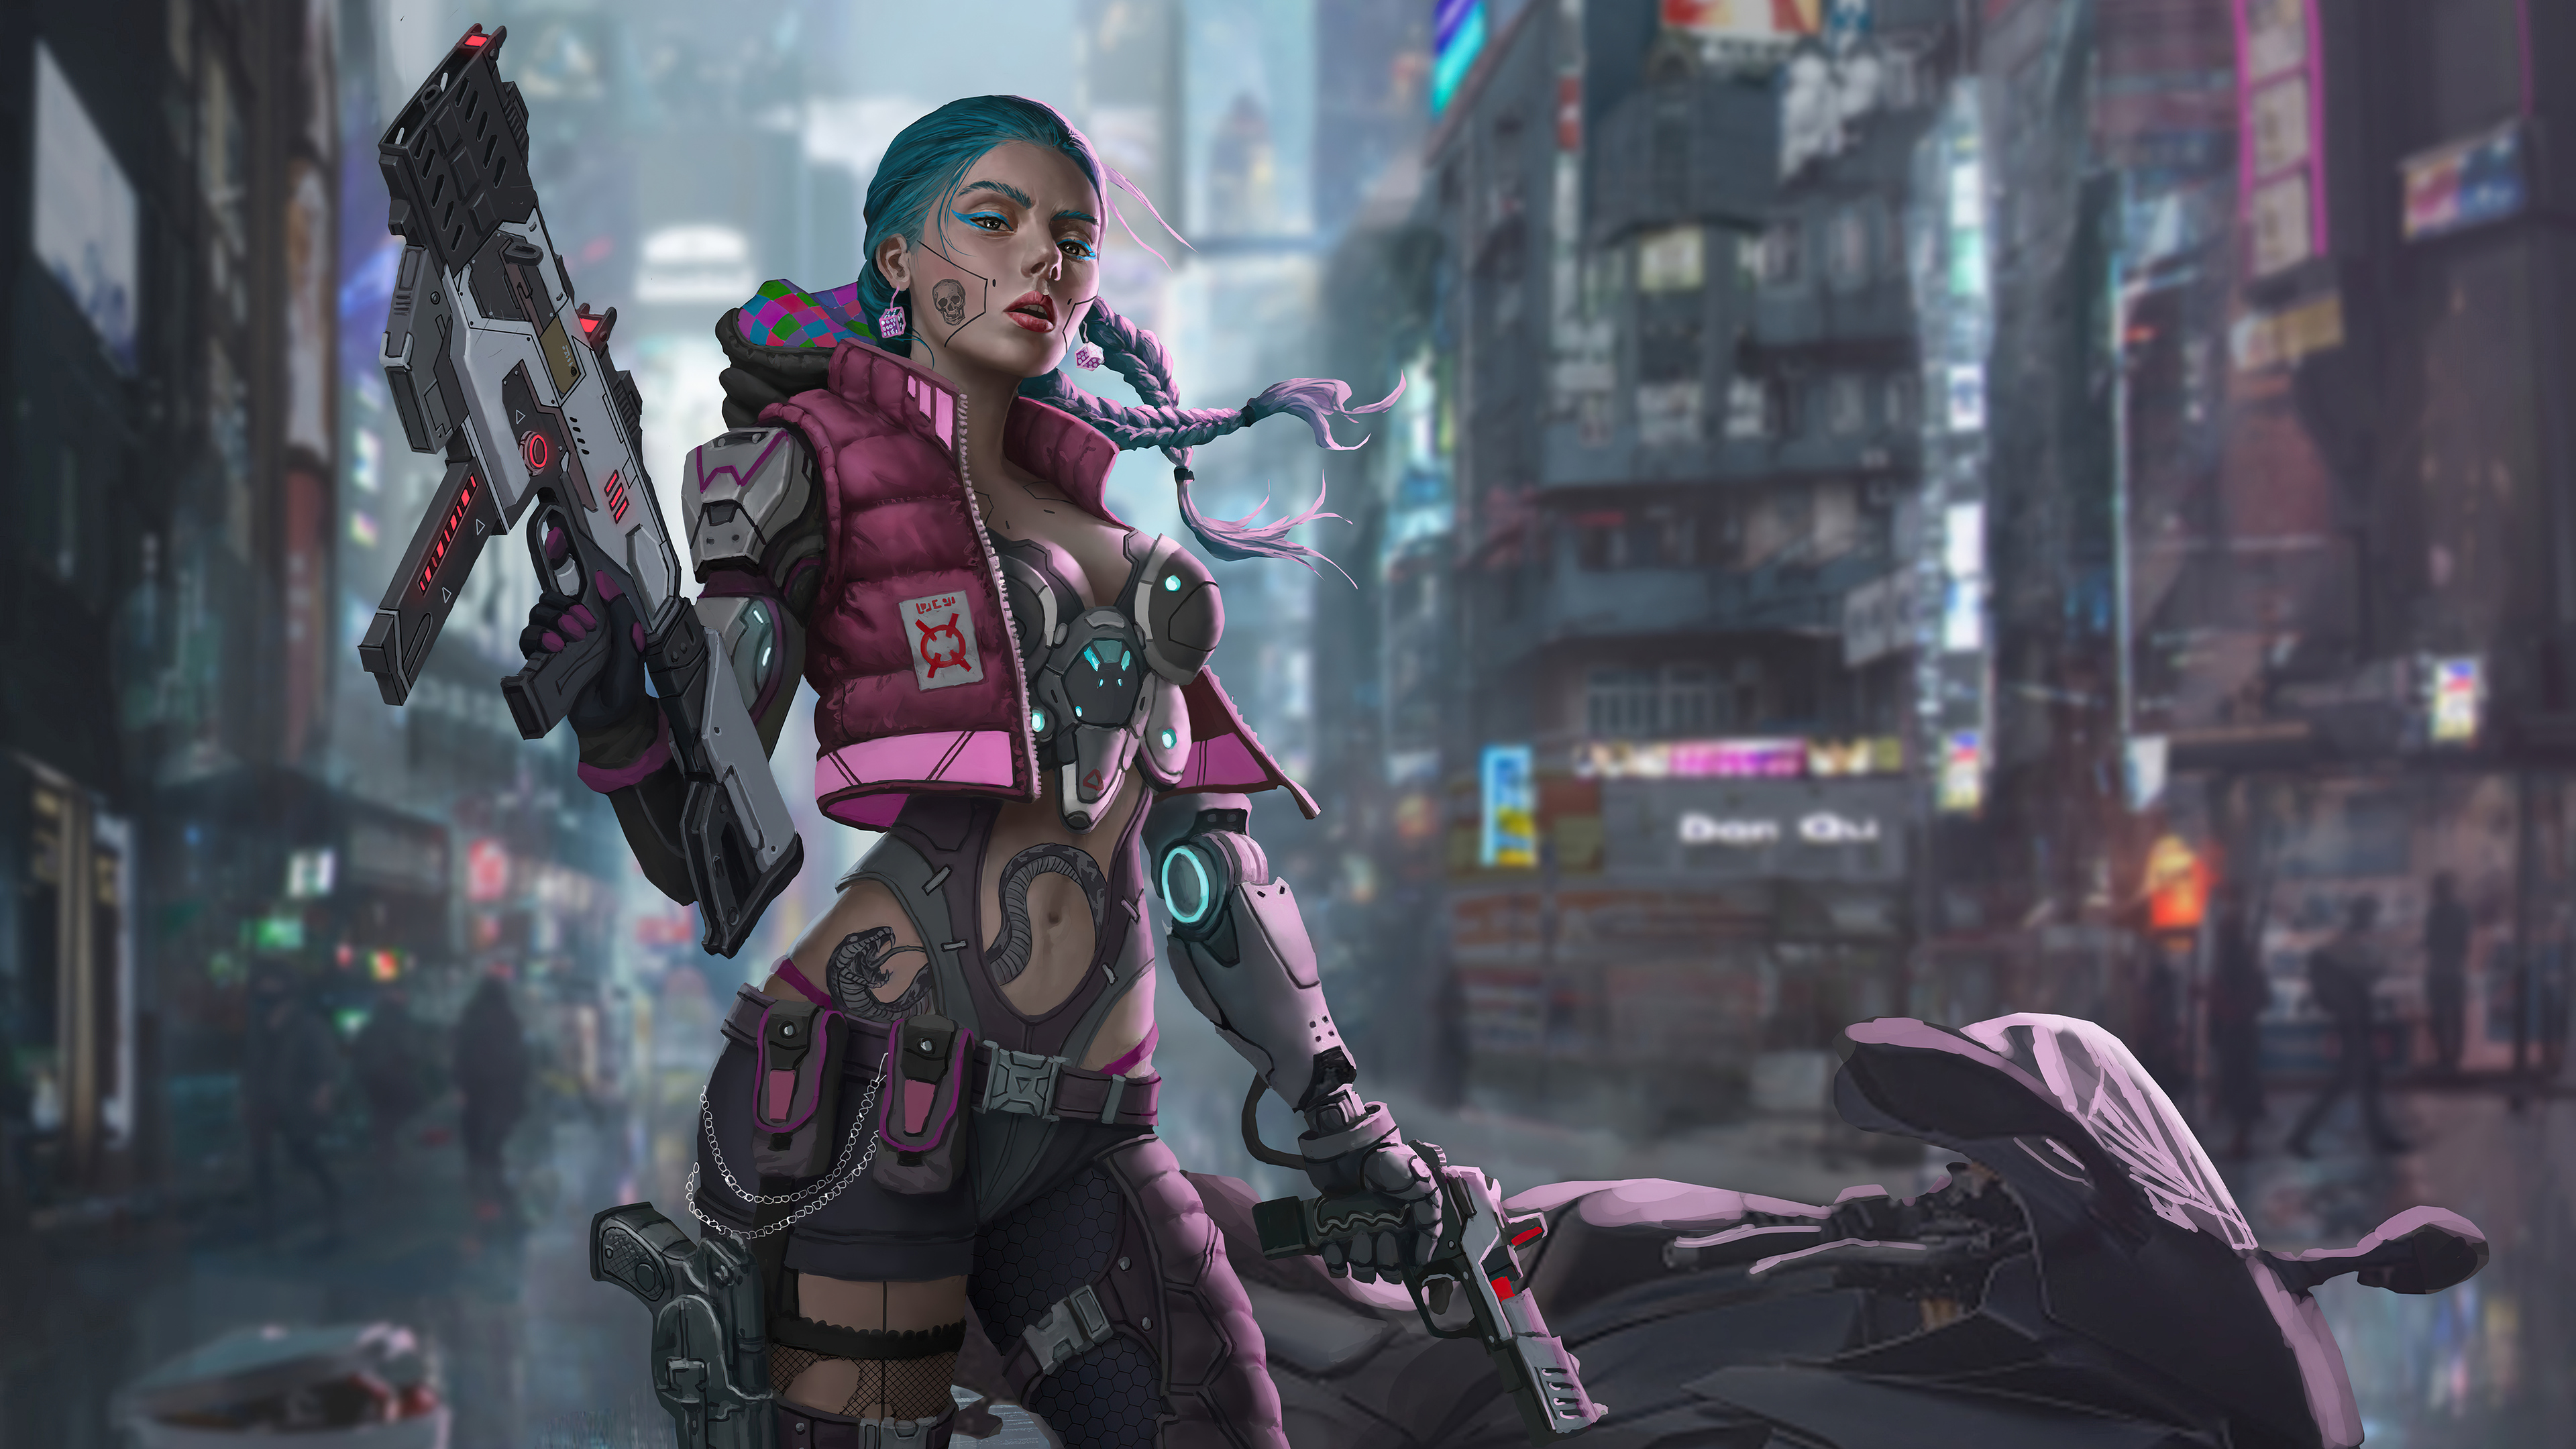 Cyborg Cyberpunk Futuristic City Women Weapon Motorcycle Artwork Depth Of Field 3840x2160